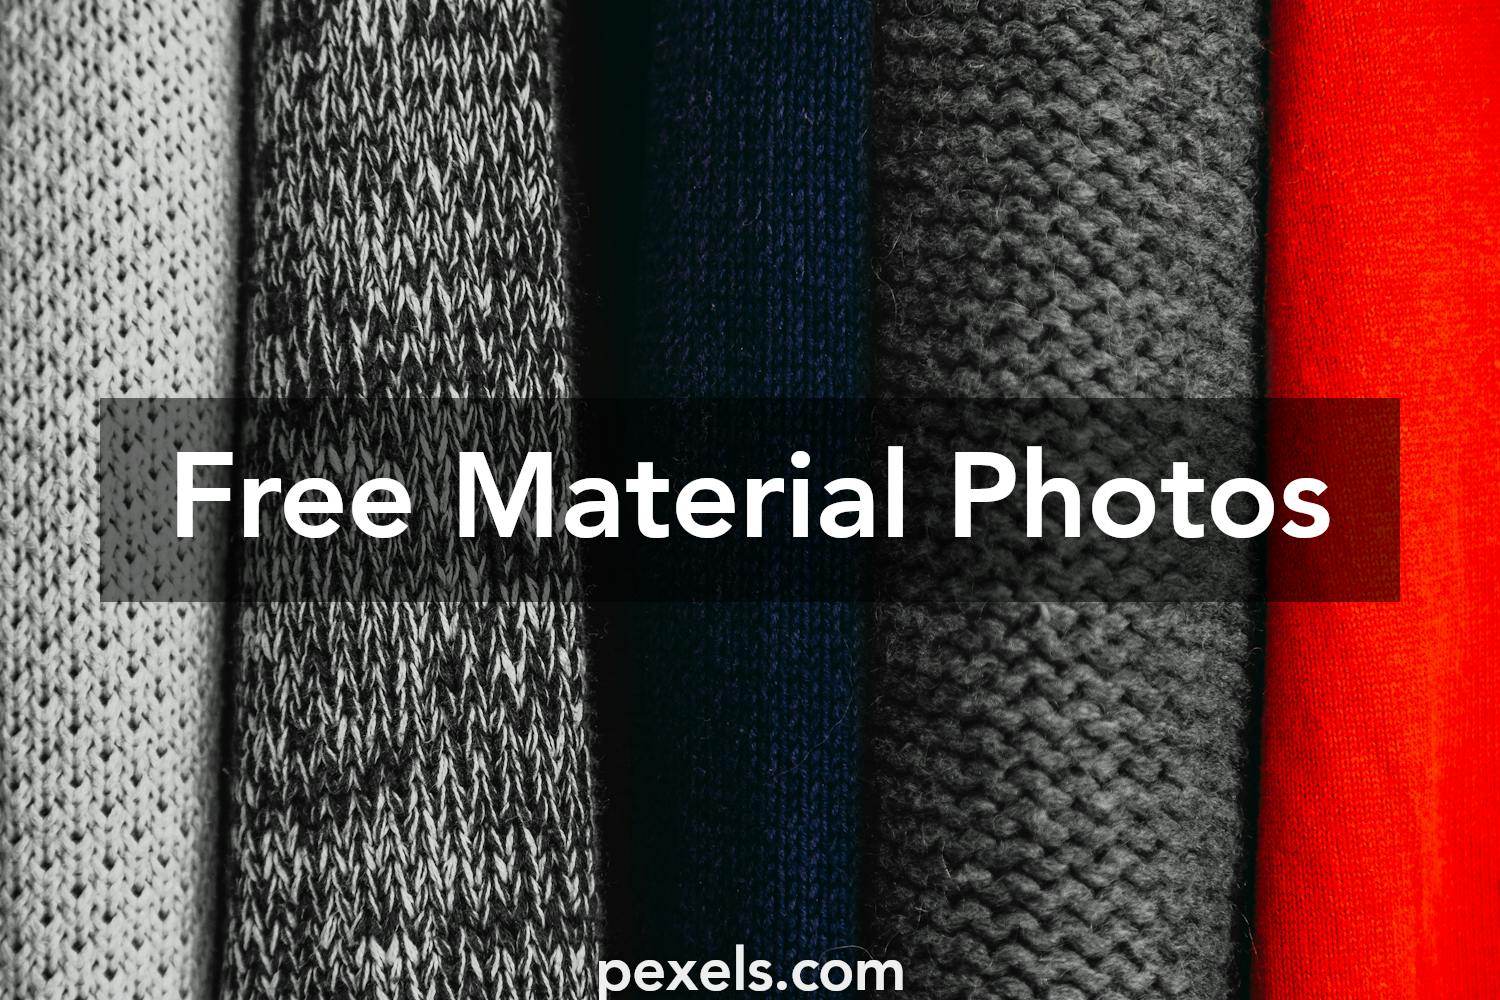 Free stock photos of material · Pexels